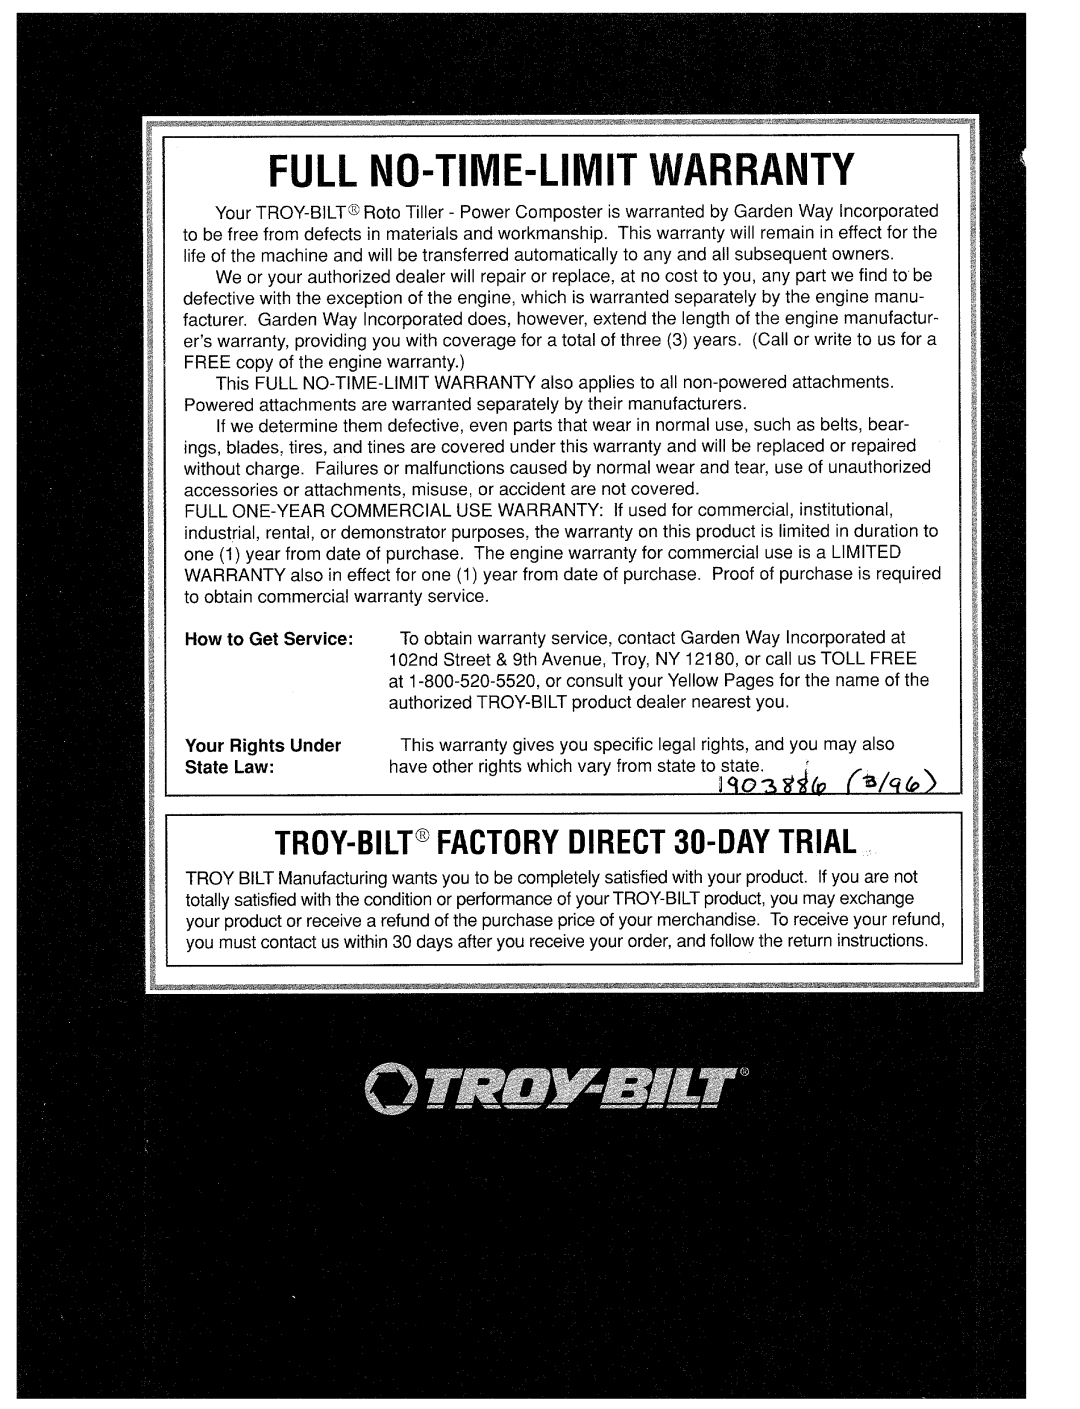 Troy-Bilt 12060, 12065 manual 